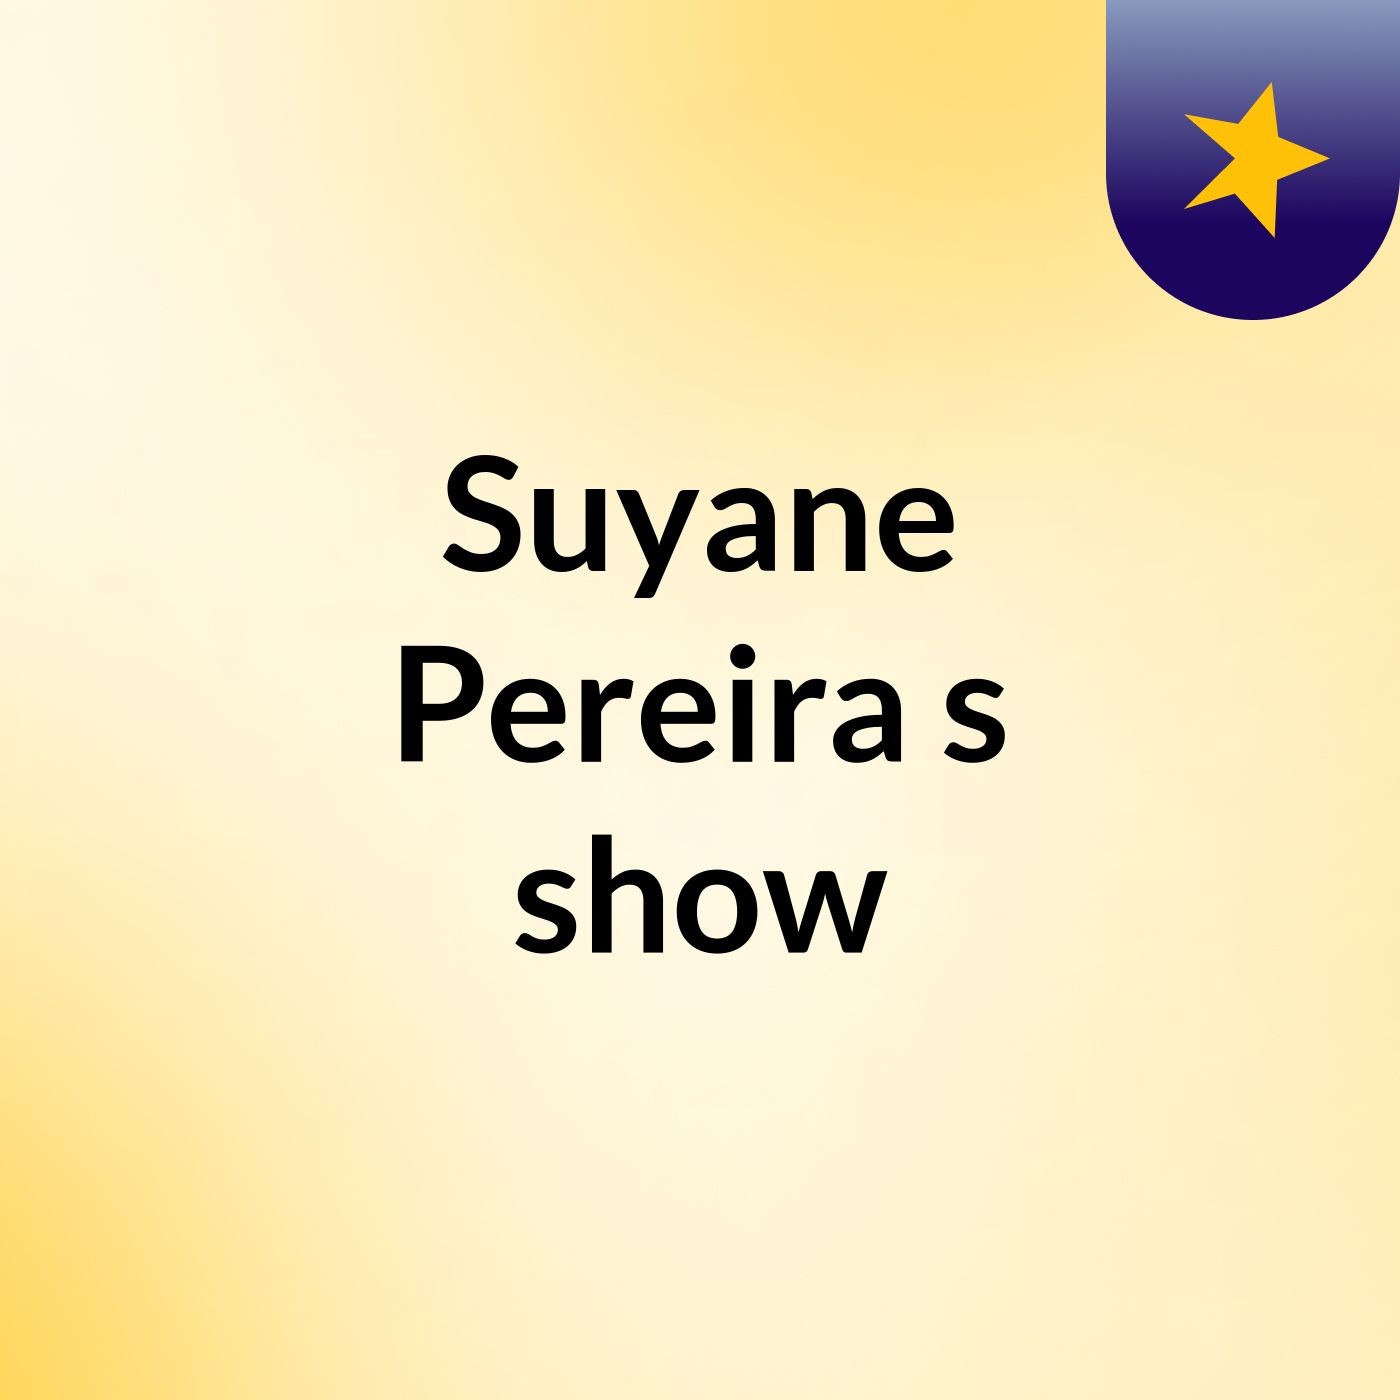 Suyane Pereira's show